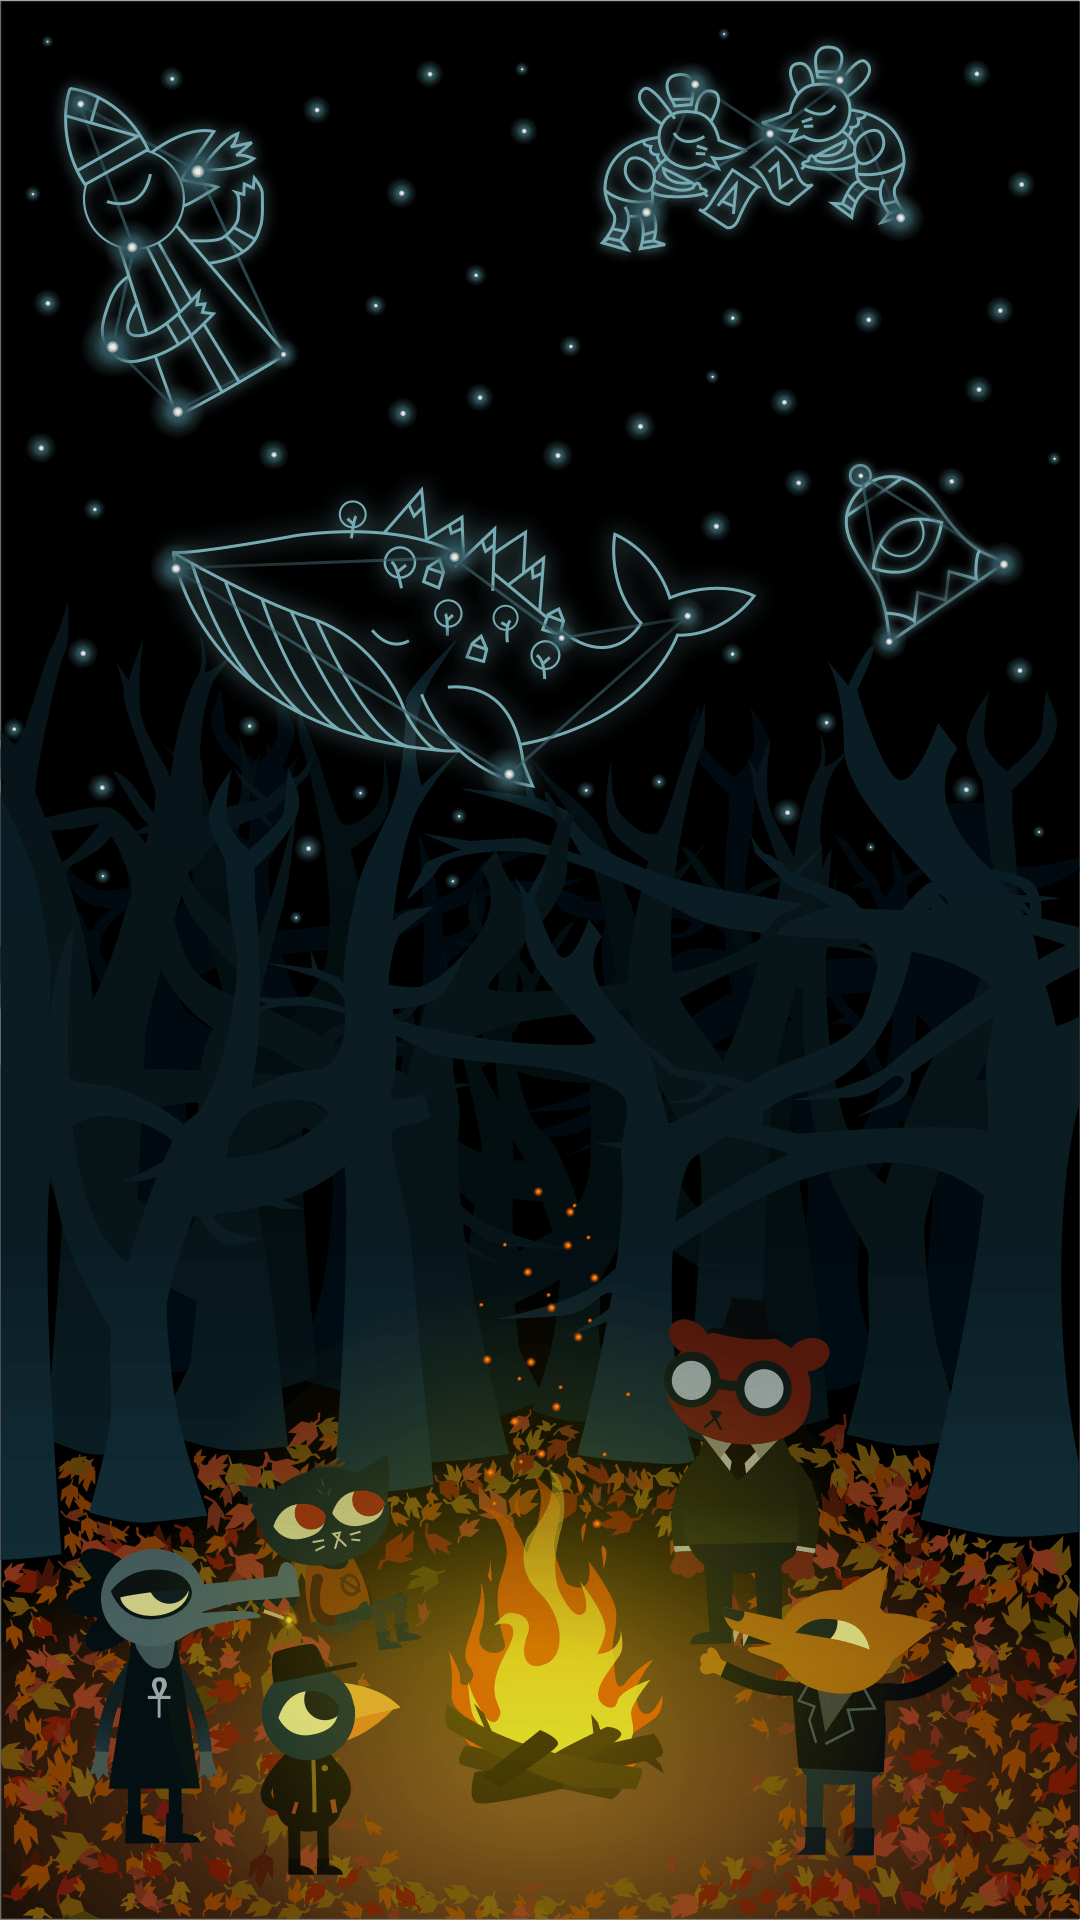 night in the woods wiki weird autumn edition